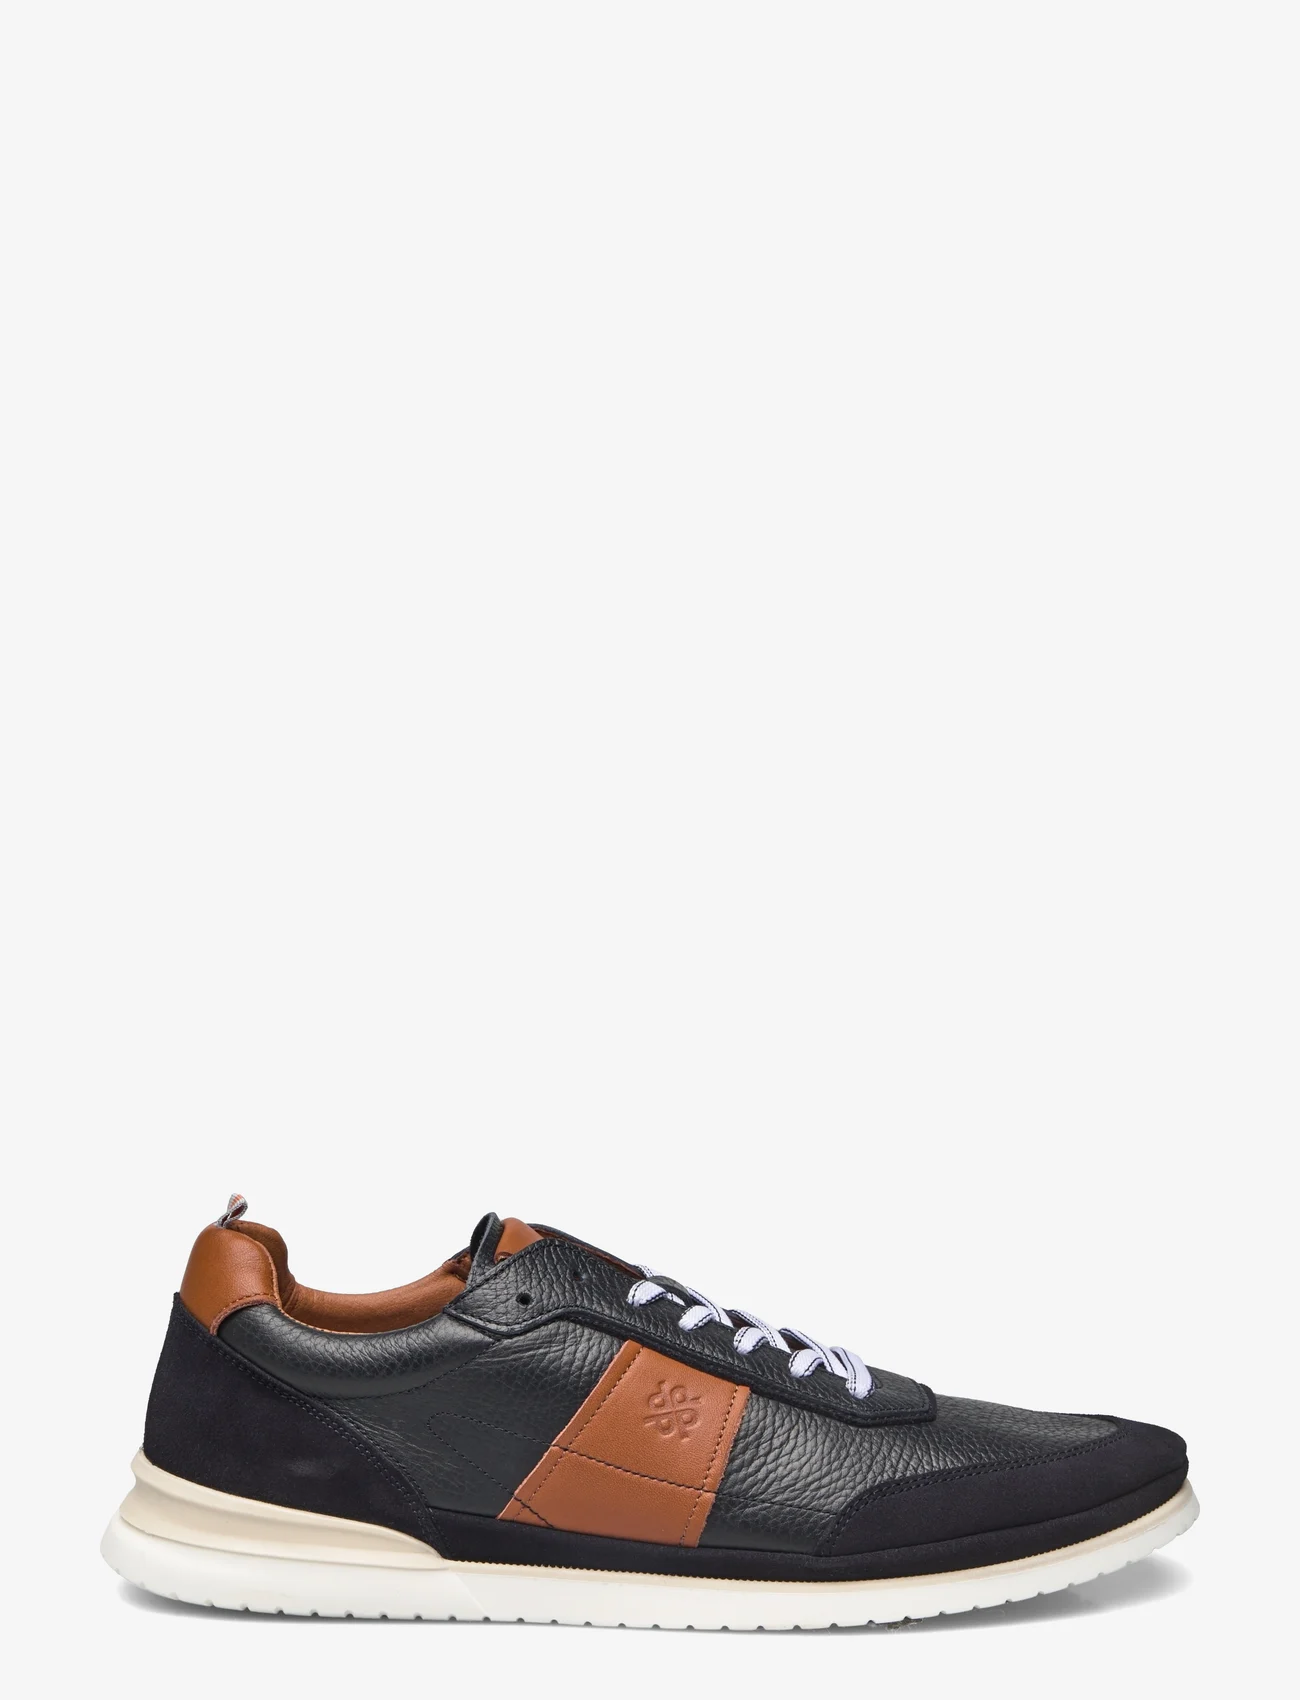 Playboy Footwear - Dan - low tops - navy leather/suede combi - 1